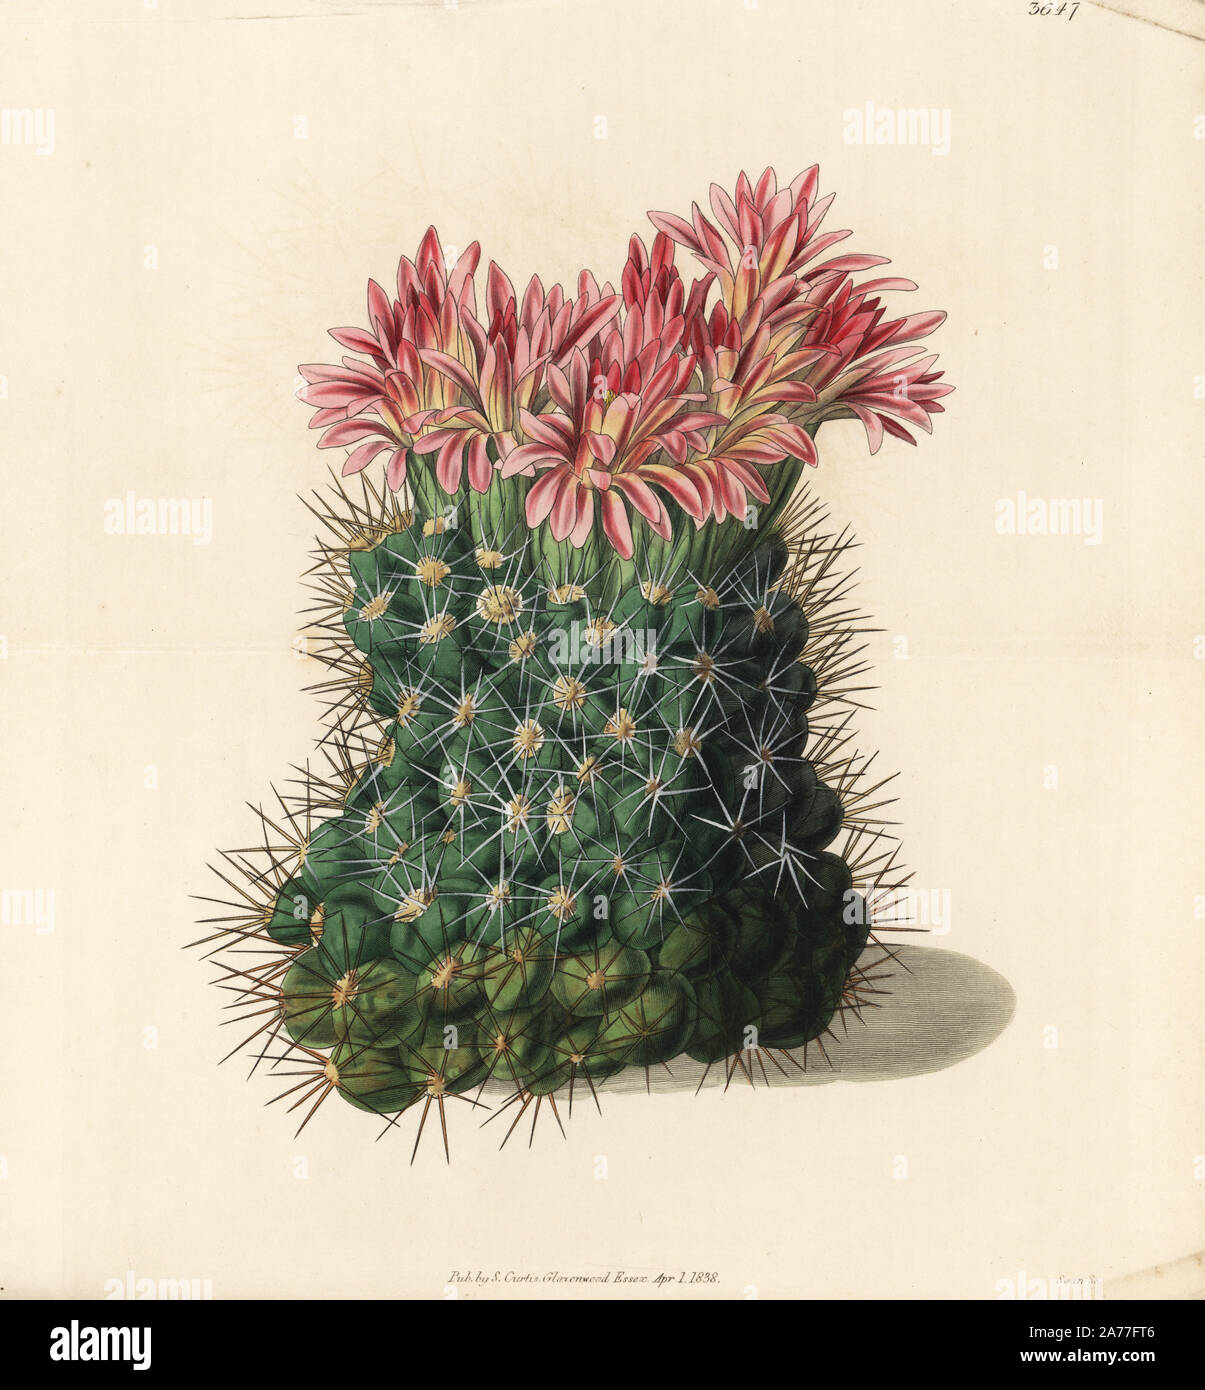 Copious flowering mammillaria cactus, Mammillaria floribunda. Handcoloured copperplate engraving after a botanical illustration from William Jackson Hooker's Botanical Magazine, London, 1838. Stock Photo